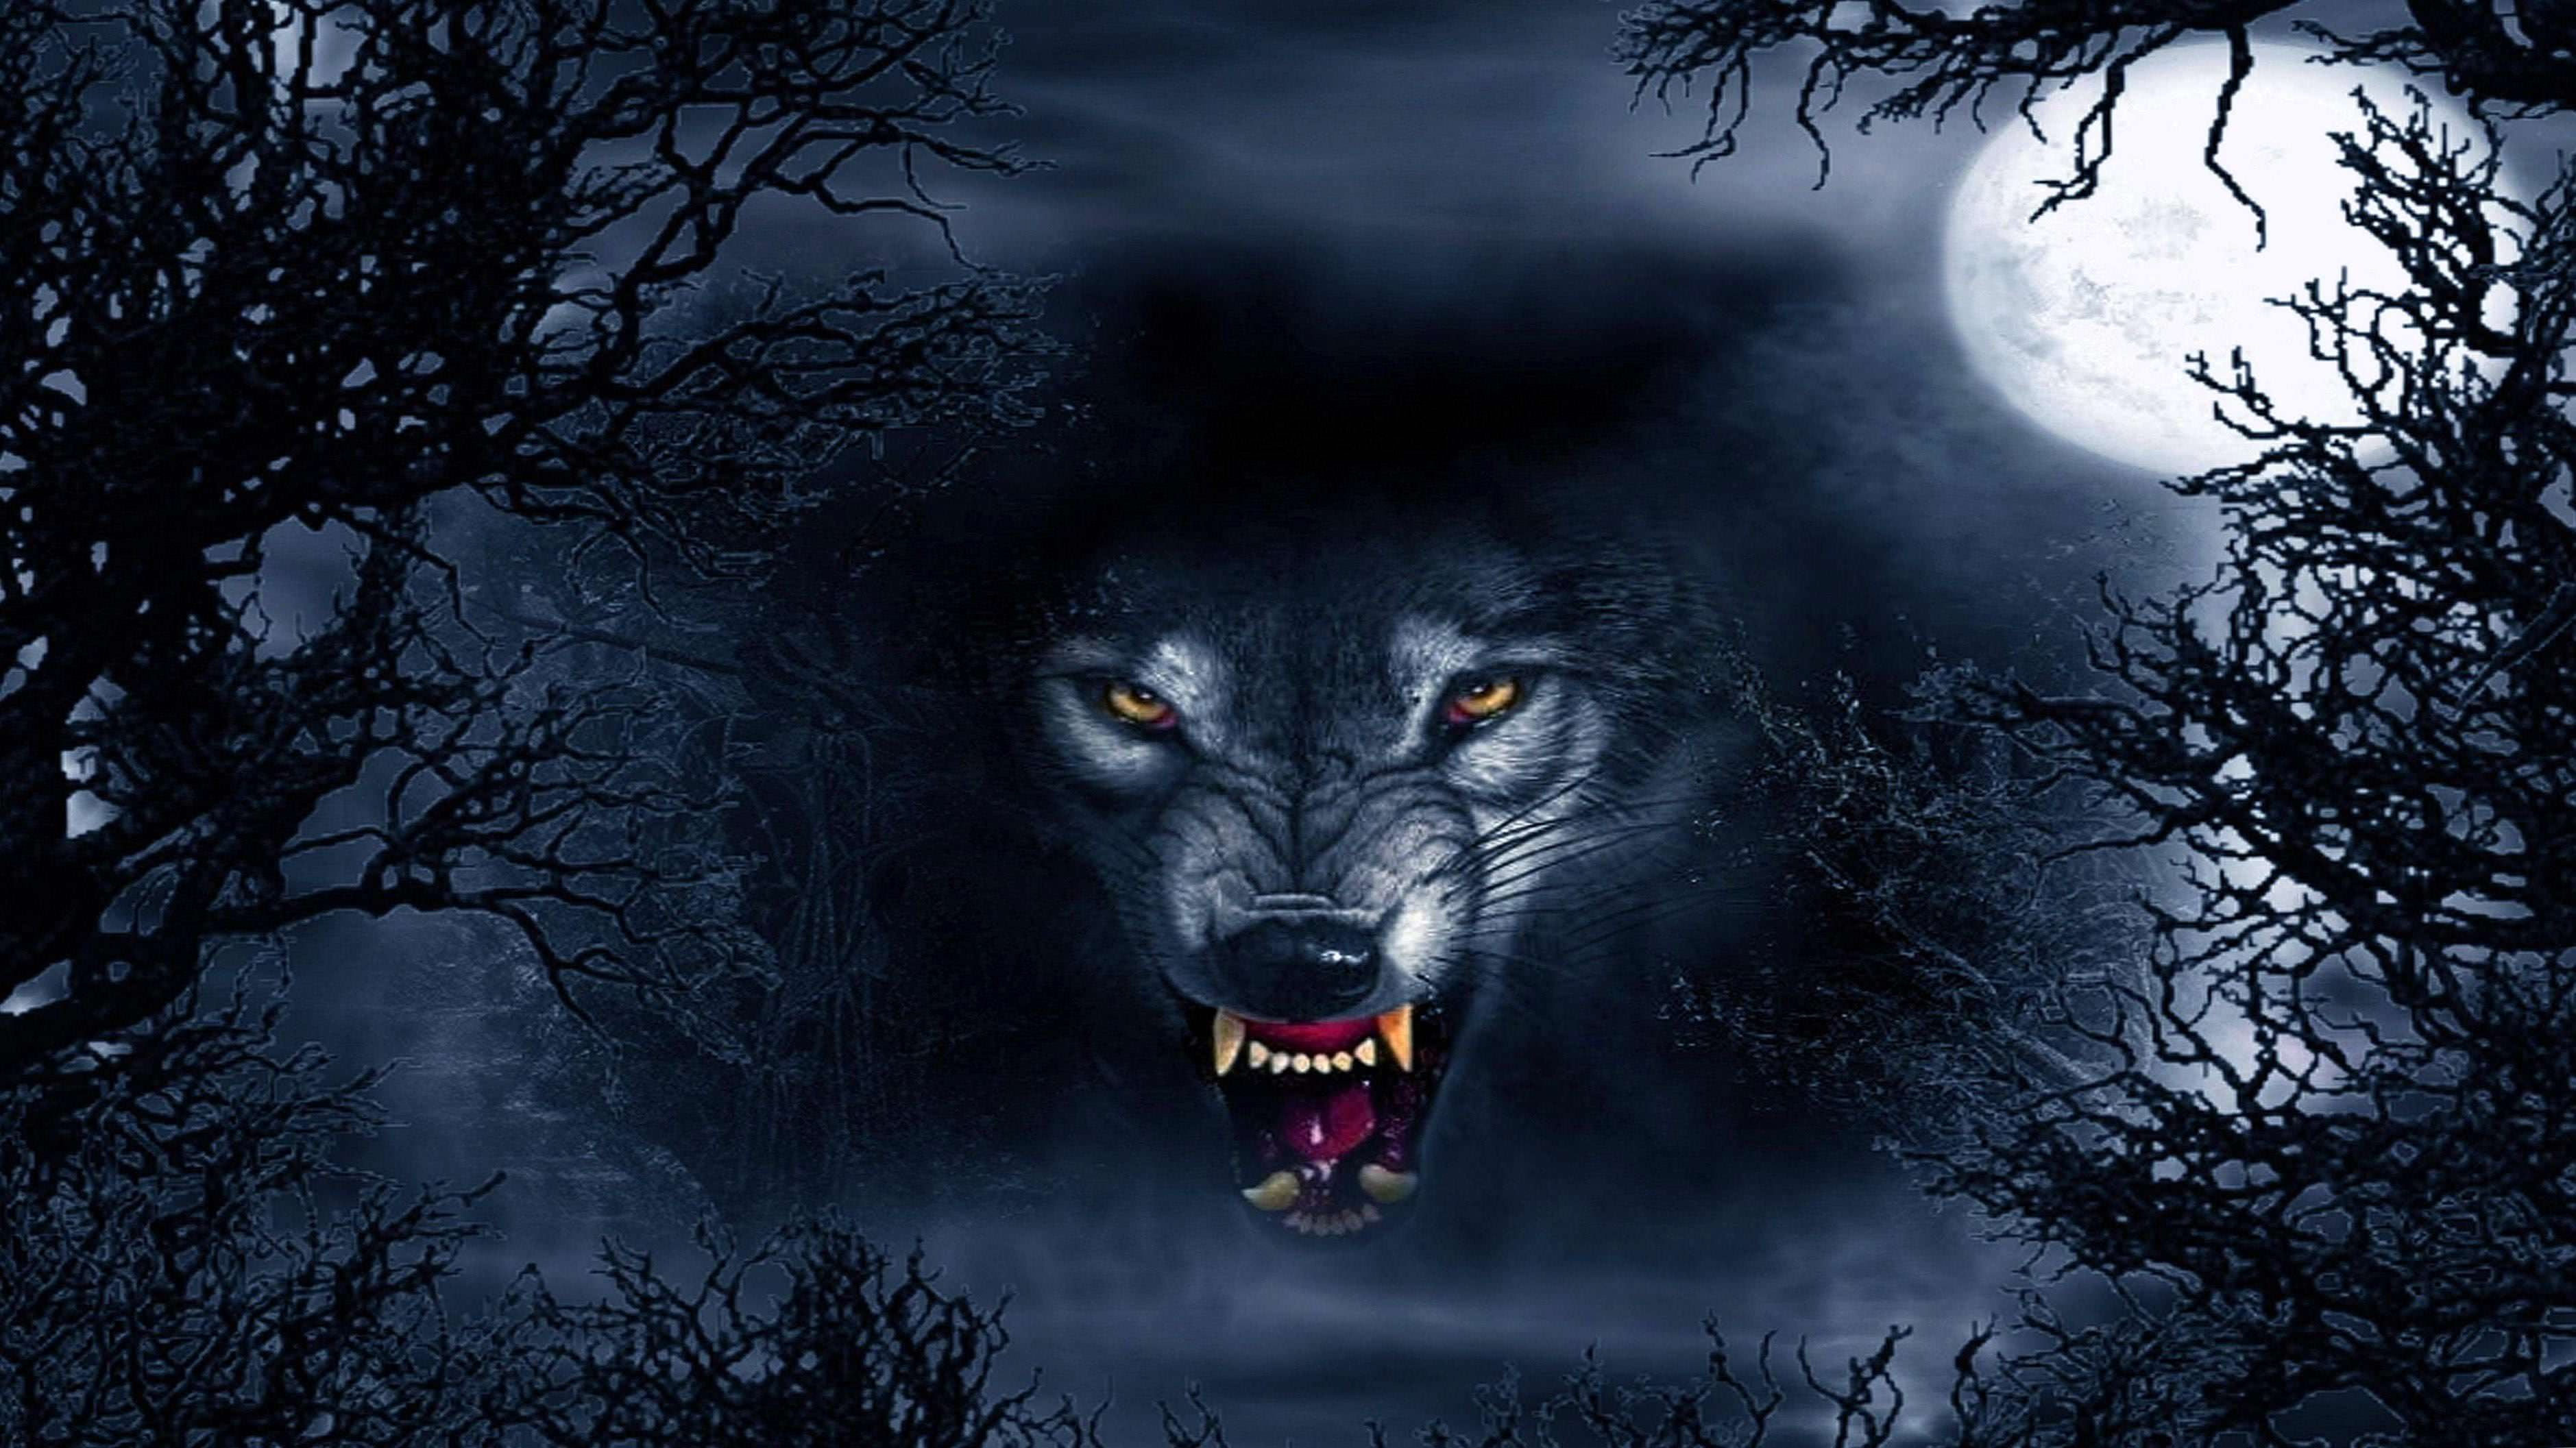 Evil Wolf Full HD Wallpaper Image 1